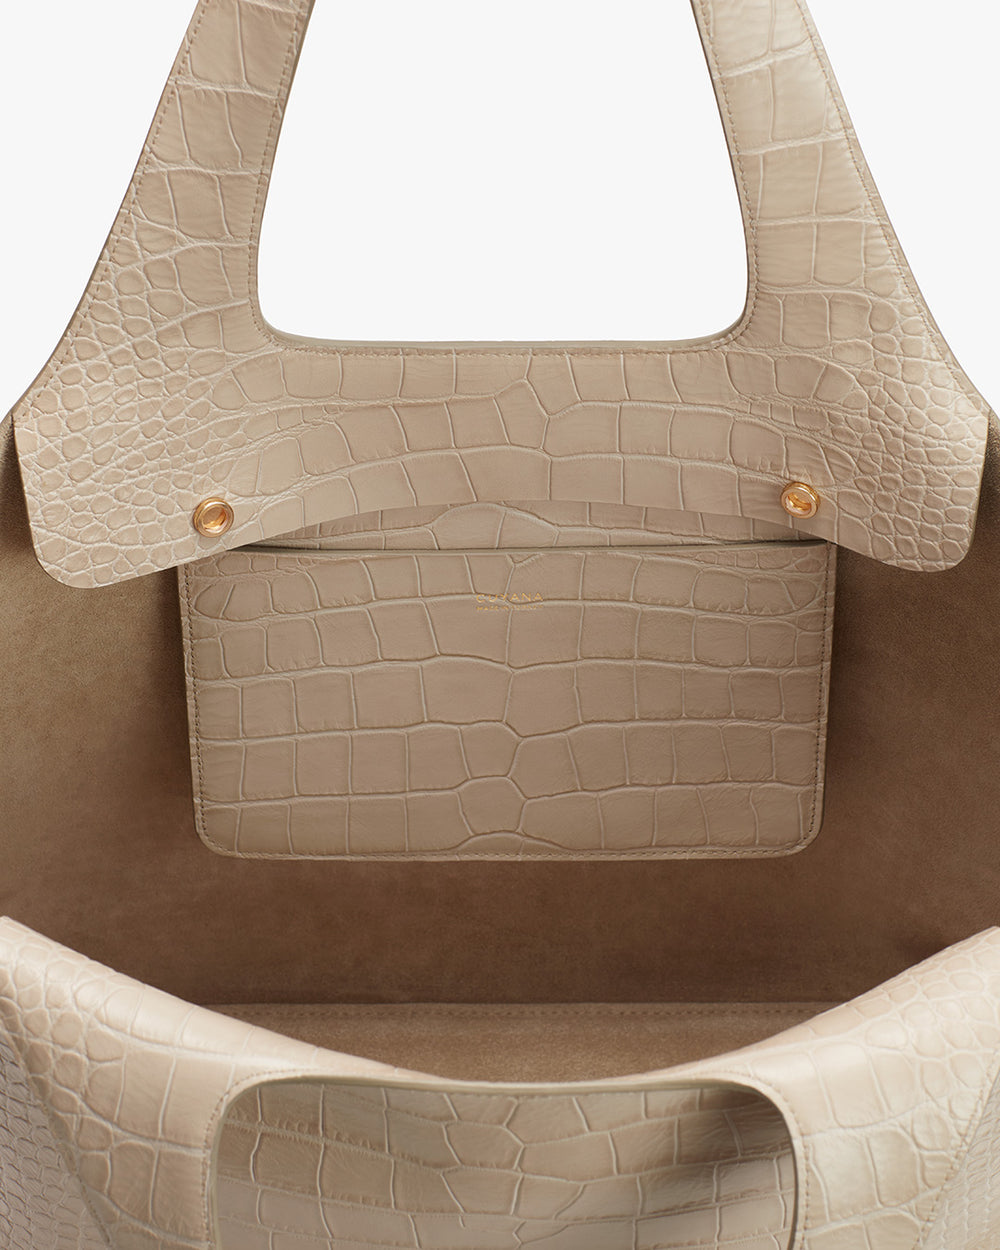 Beige handbag with textured exterior and inner pocket.